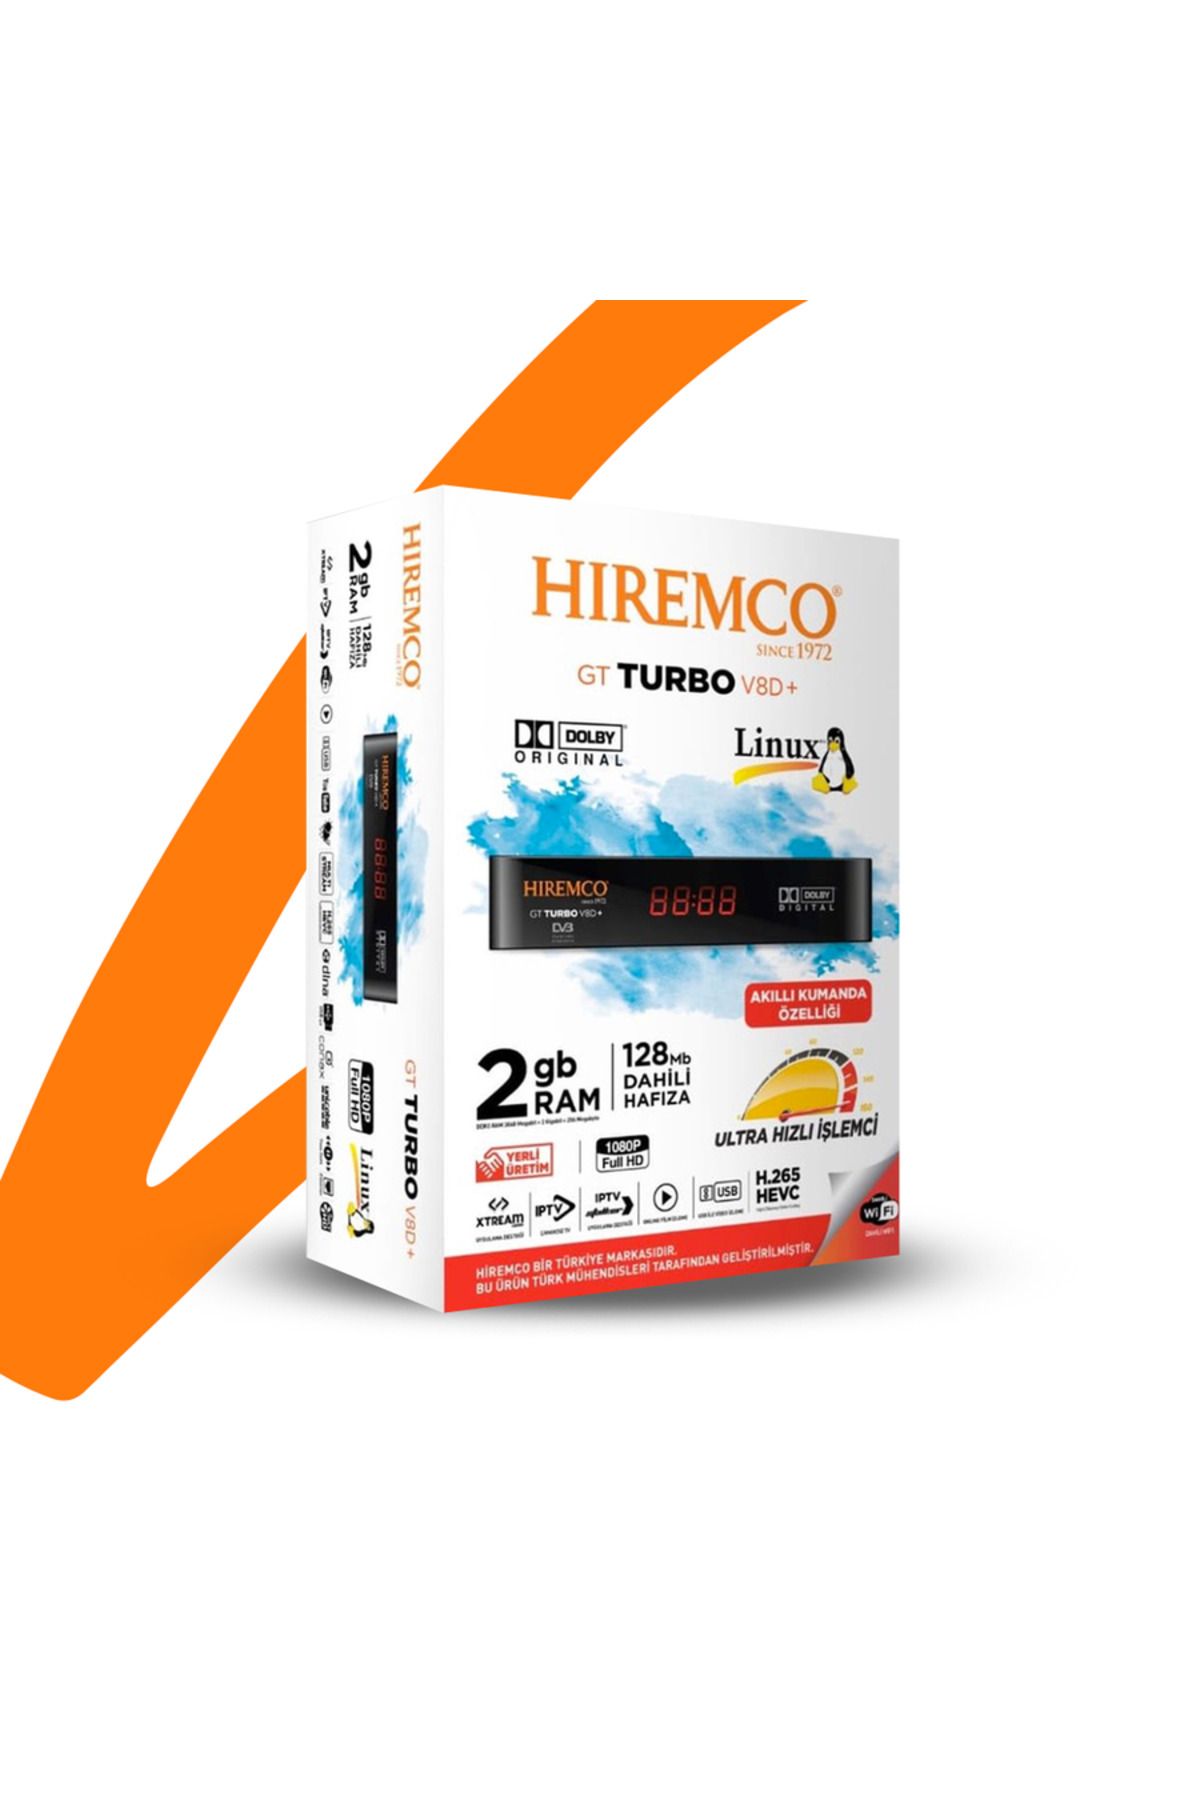 Hiremco GT Turbo V8D + Full HD Uydu Alıcısı 2021 Model